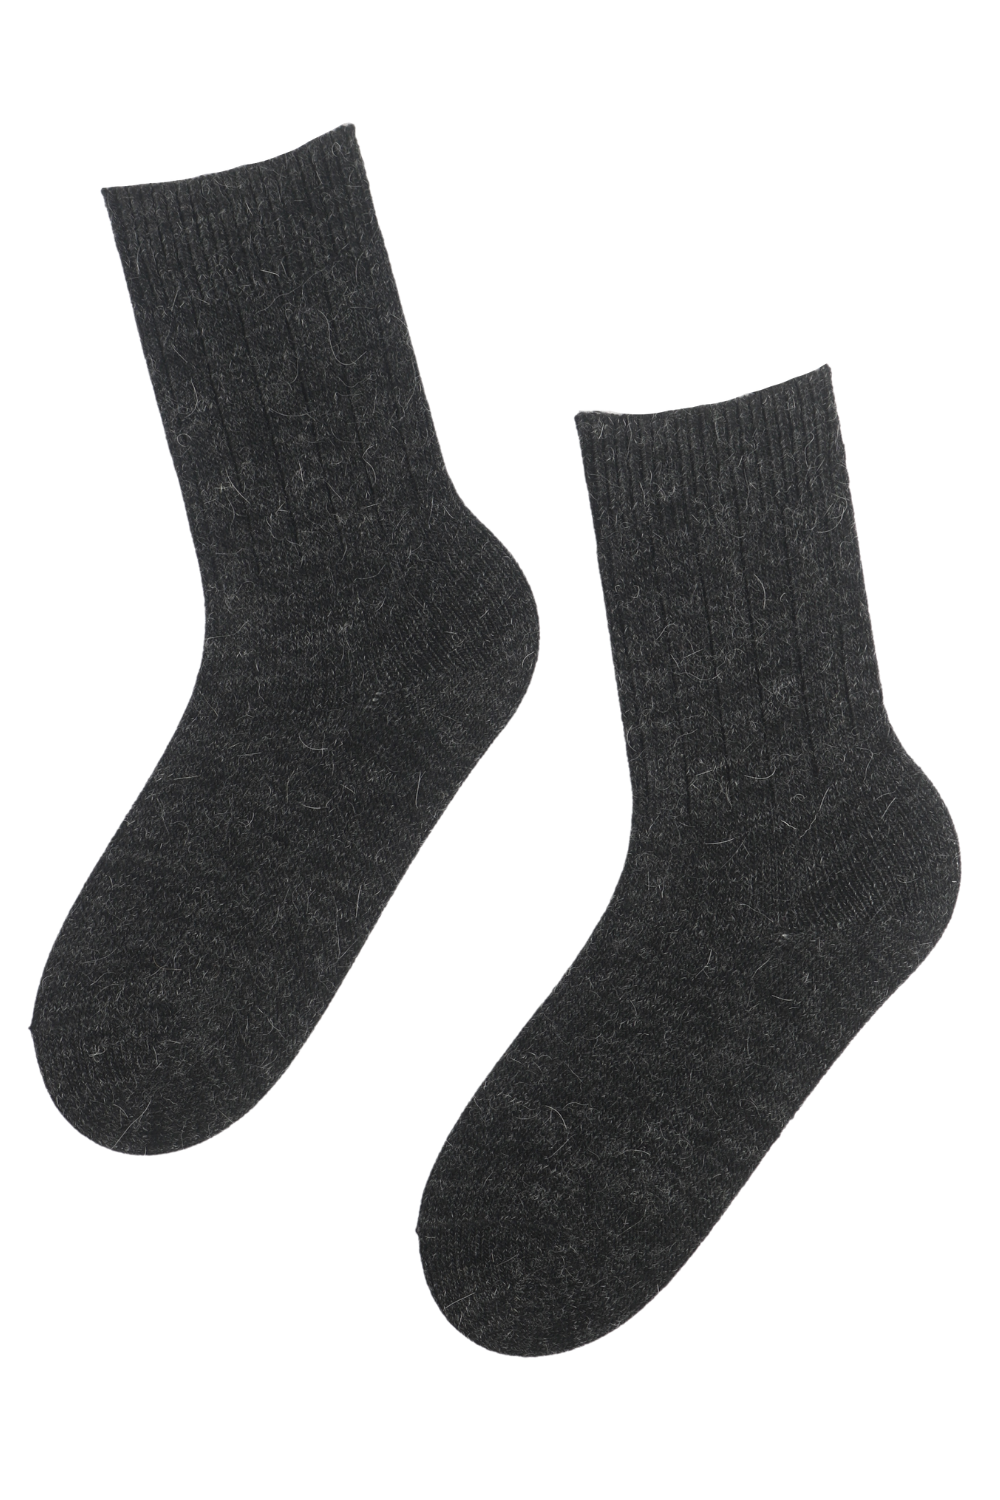 Alpaca wool black socks